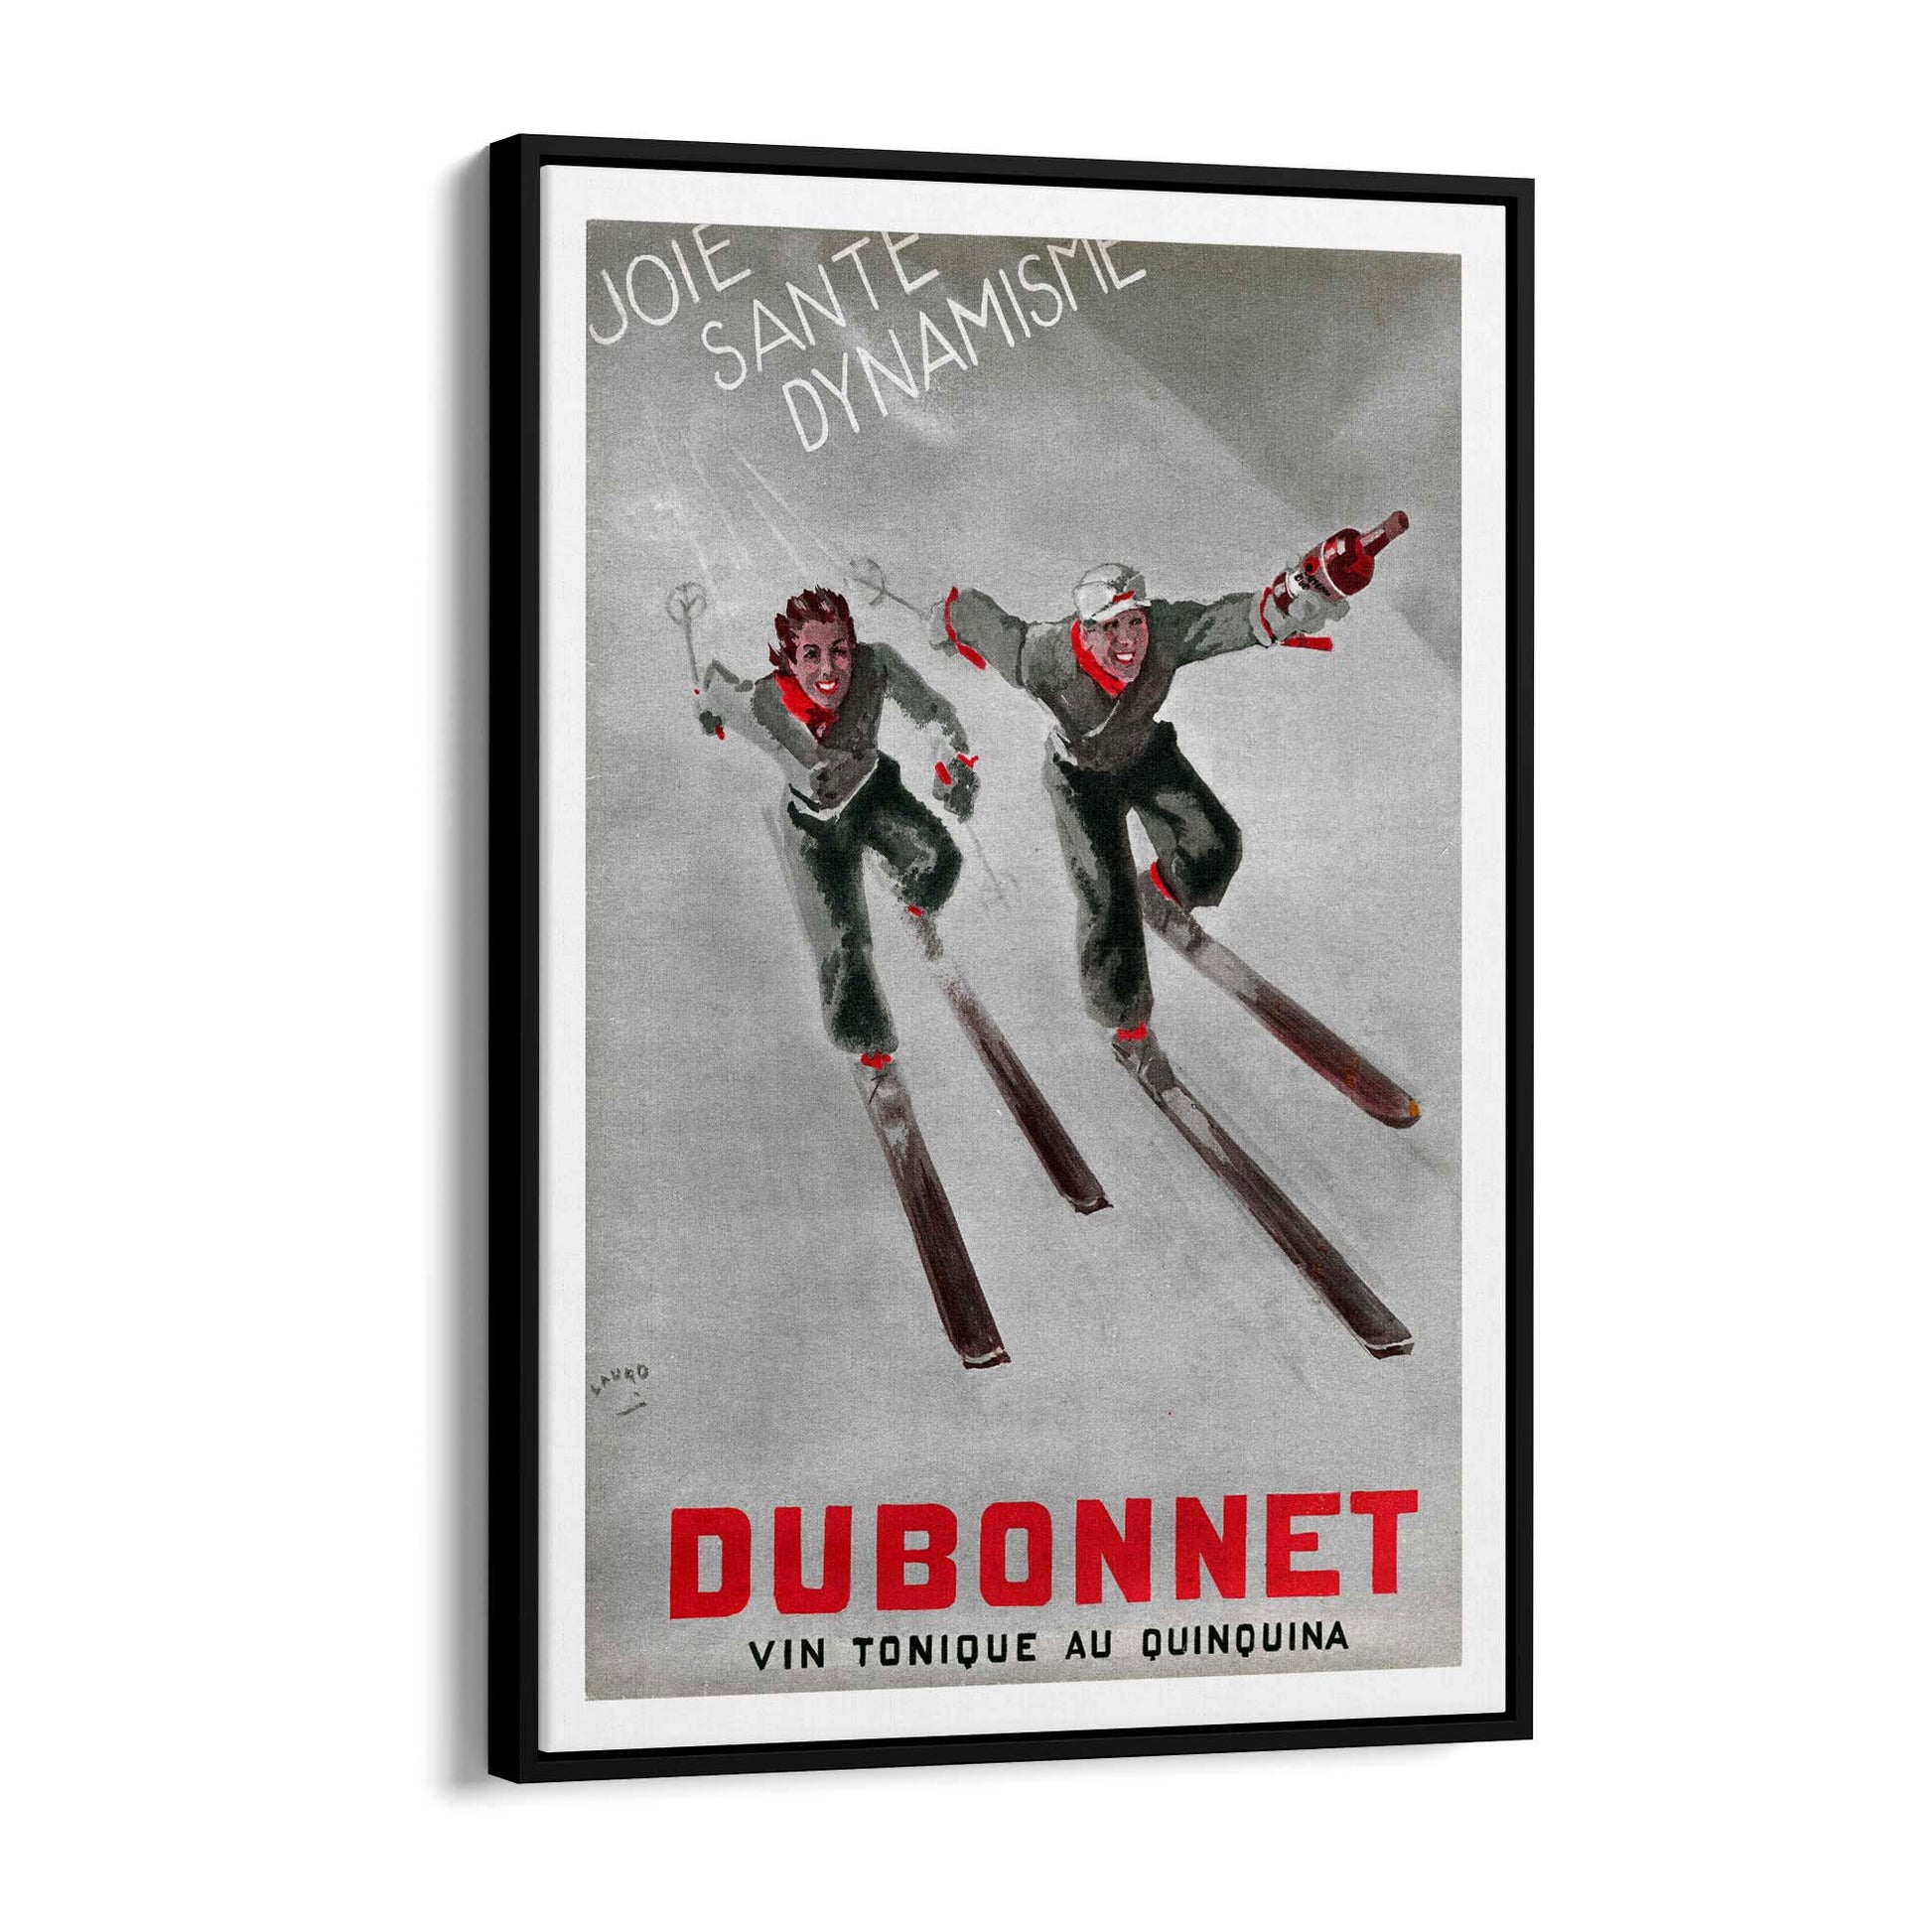 Dubonnet Aperitif Vintage Ski Advert Wall Art - The Affordable Art Company